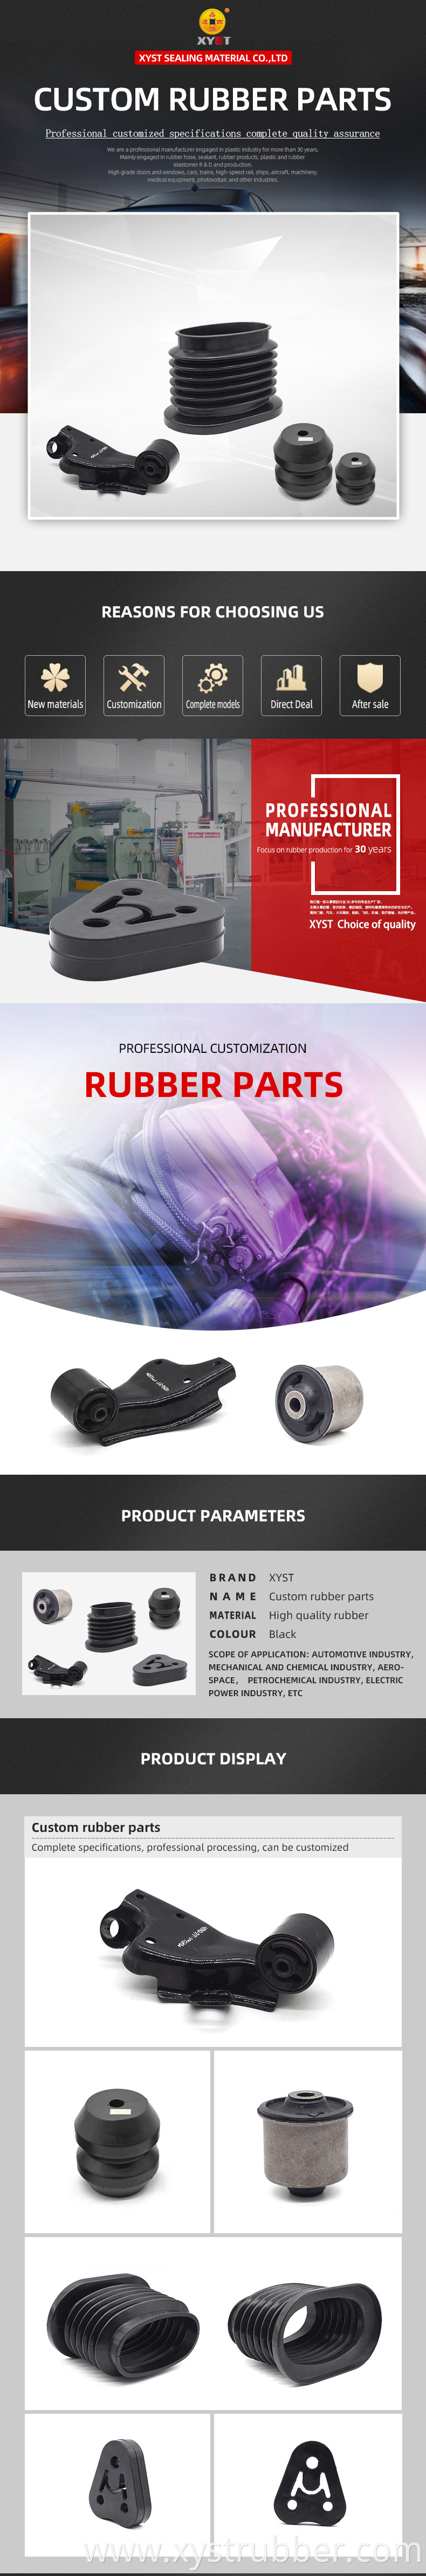 custom rubber parts